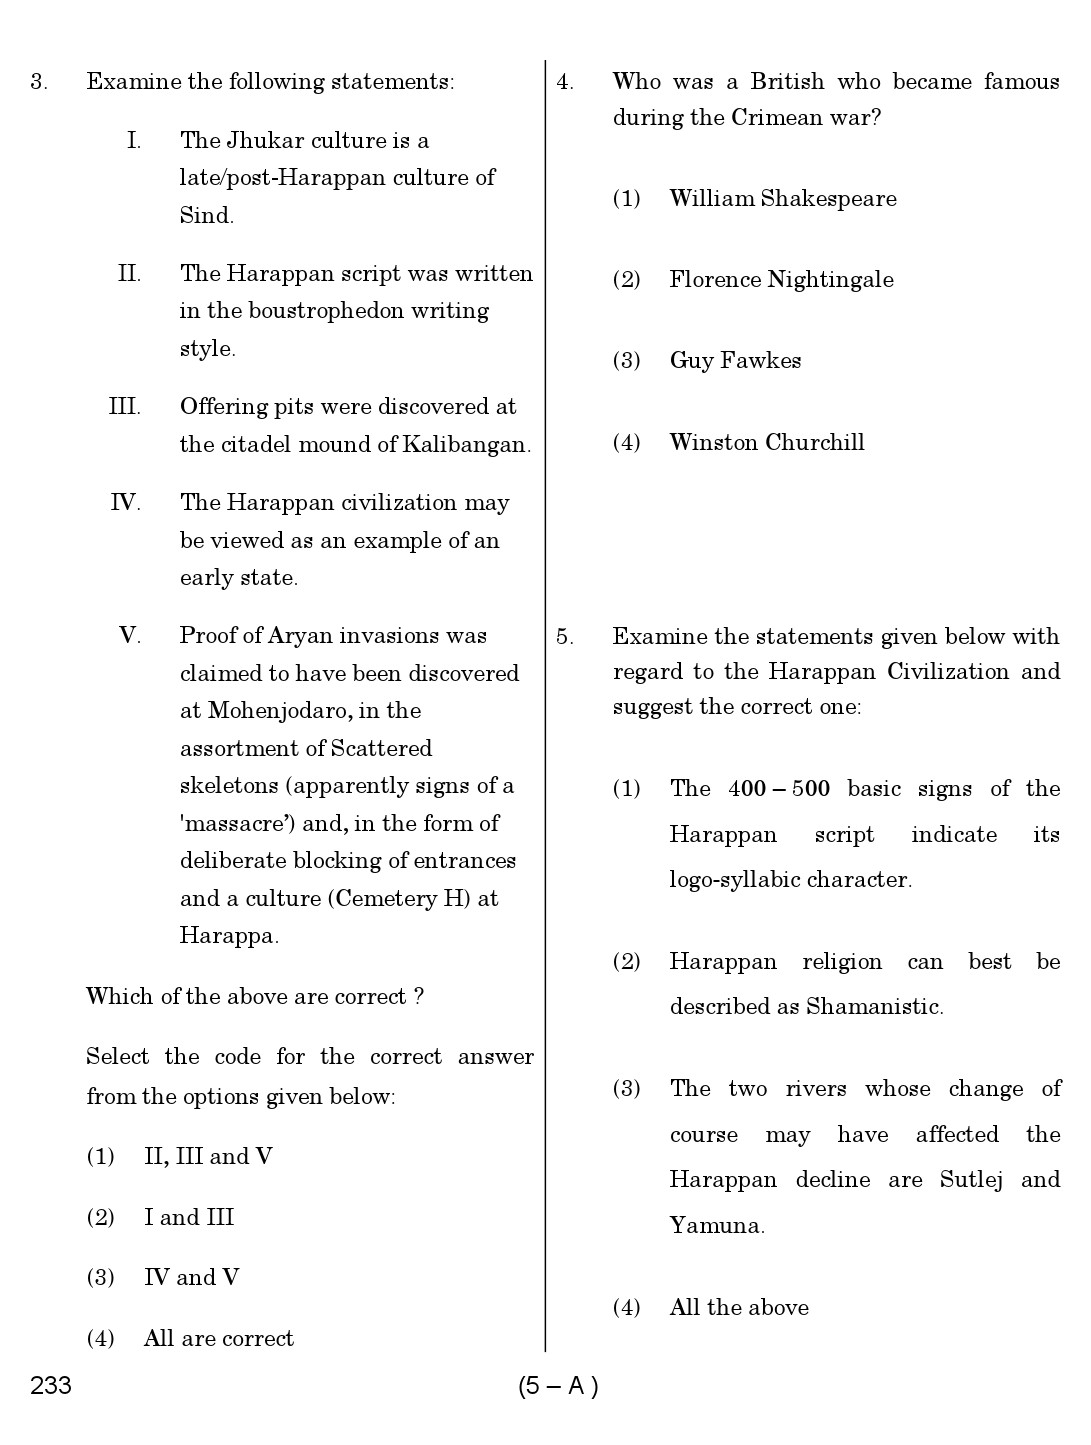 Karnataka PSC History Teacher Exam Sample Question Paper Subject code 233 5